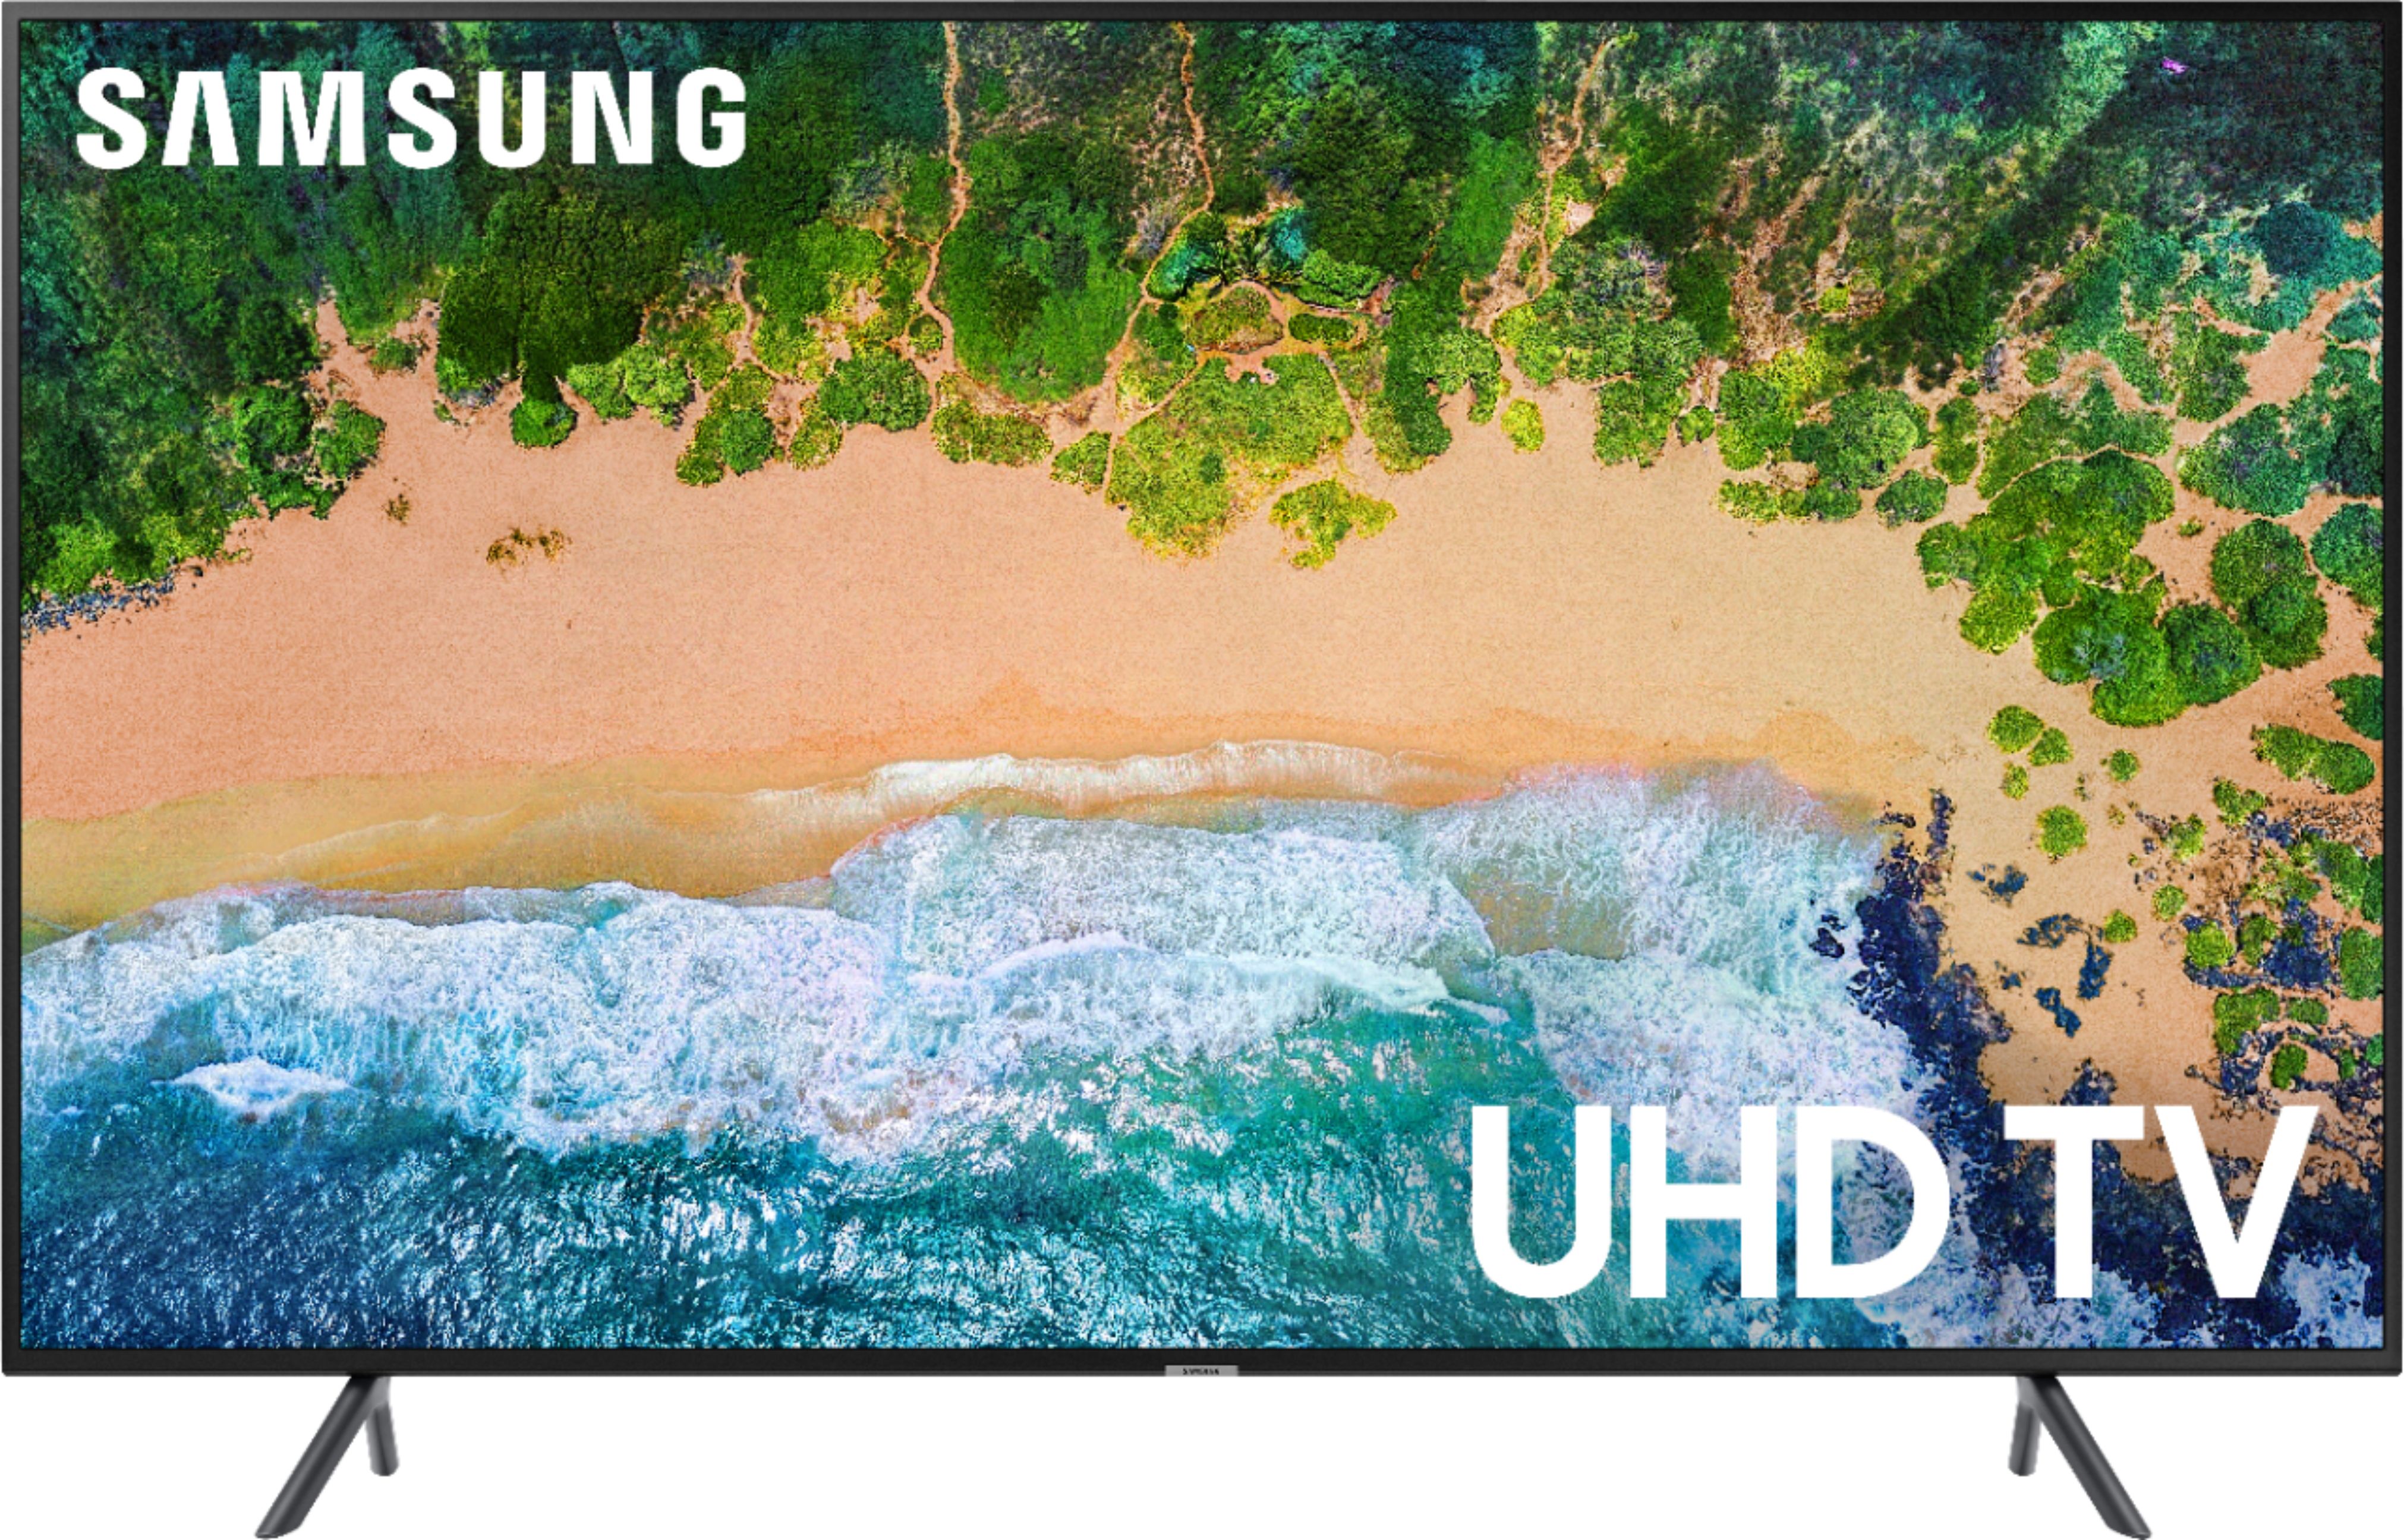 Mistillid evne undgå Samsung 75" Class 6 Series LED 4K UHD Smart Tizen TV UN75NU6900FXZA - Best  Buy